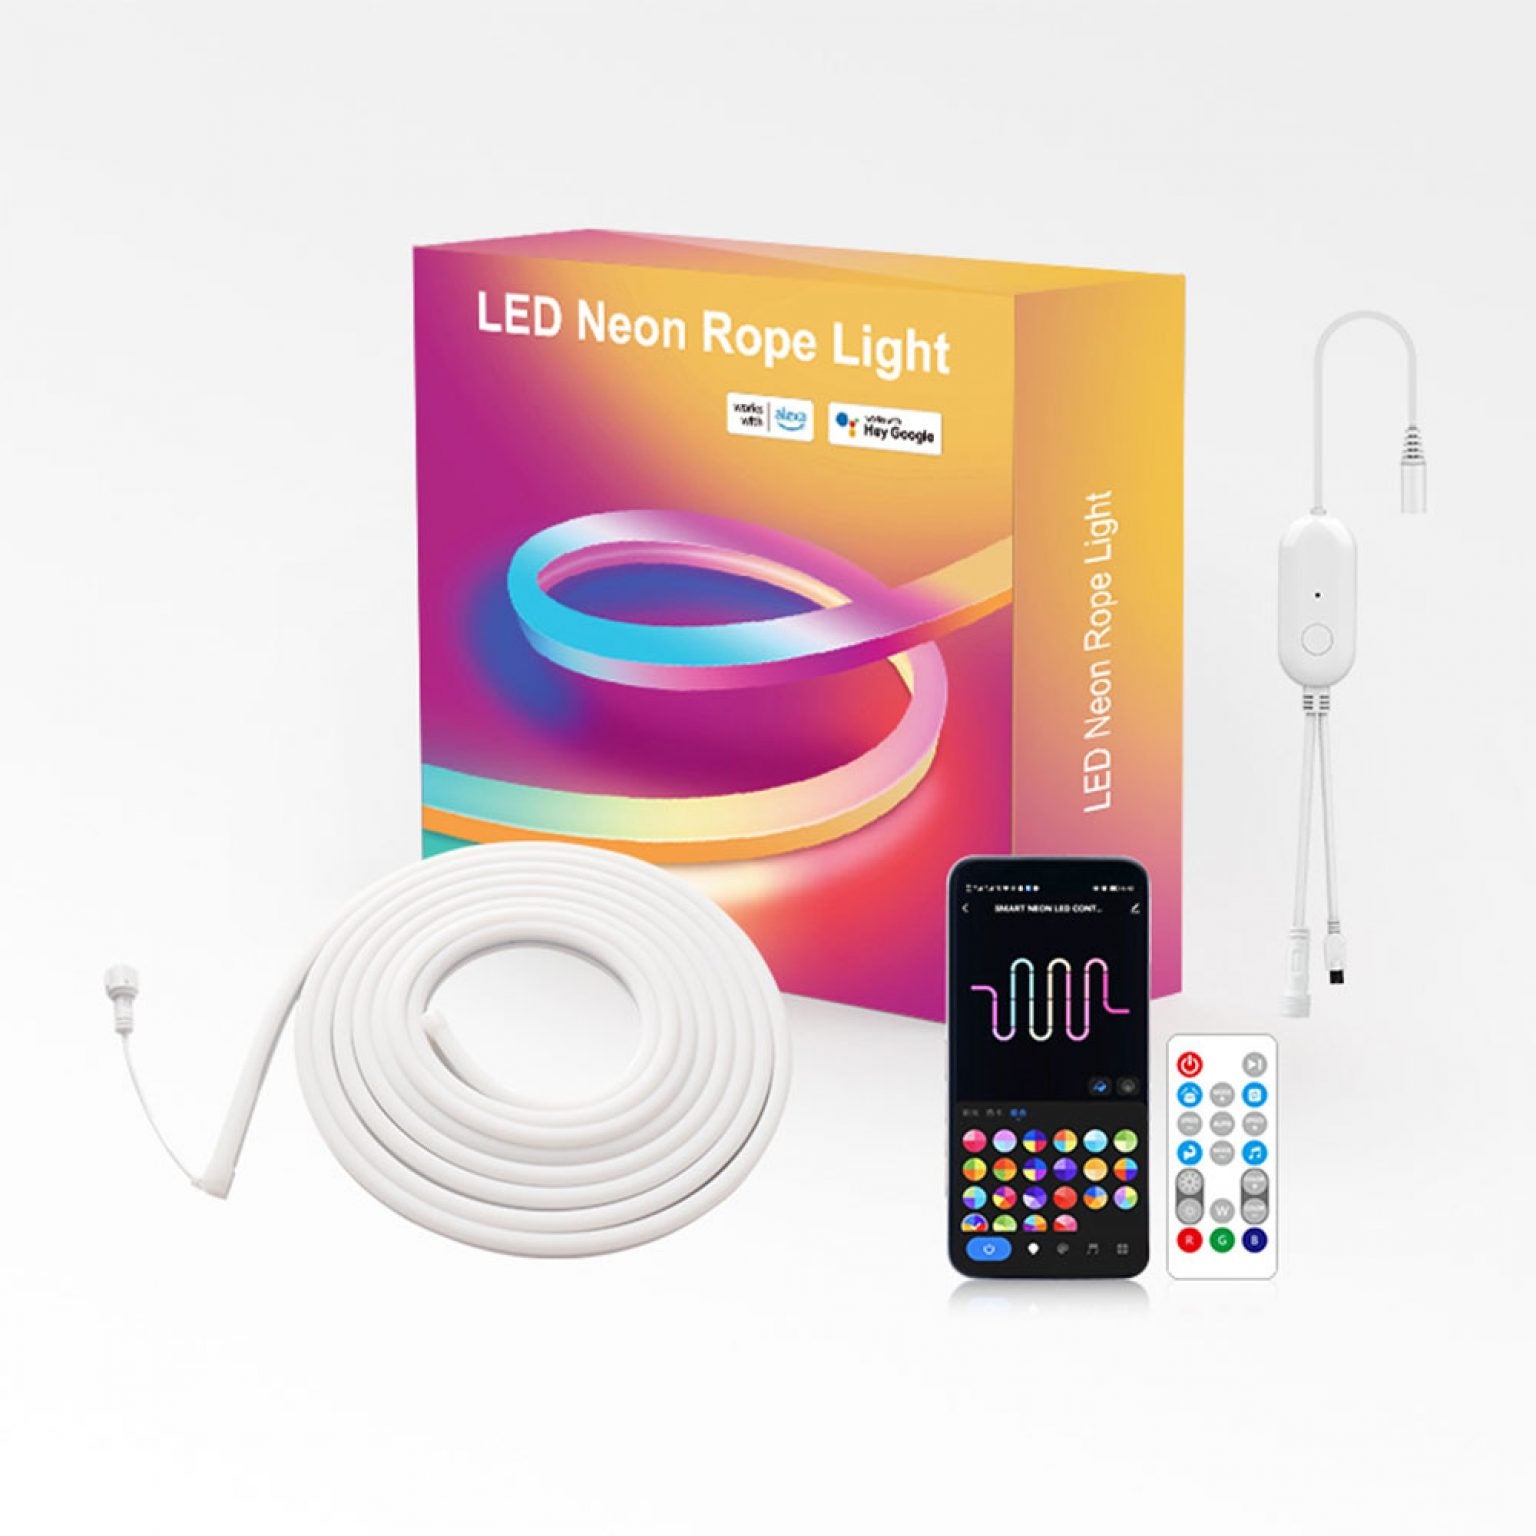 Smart LED Strip Lights (RGBIC) - 5 Meters